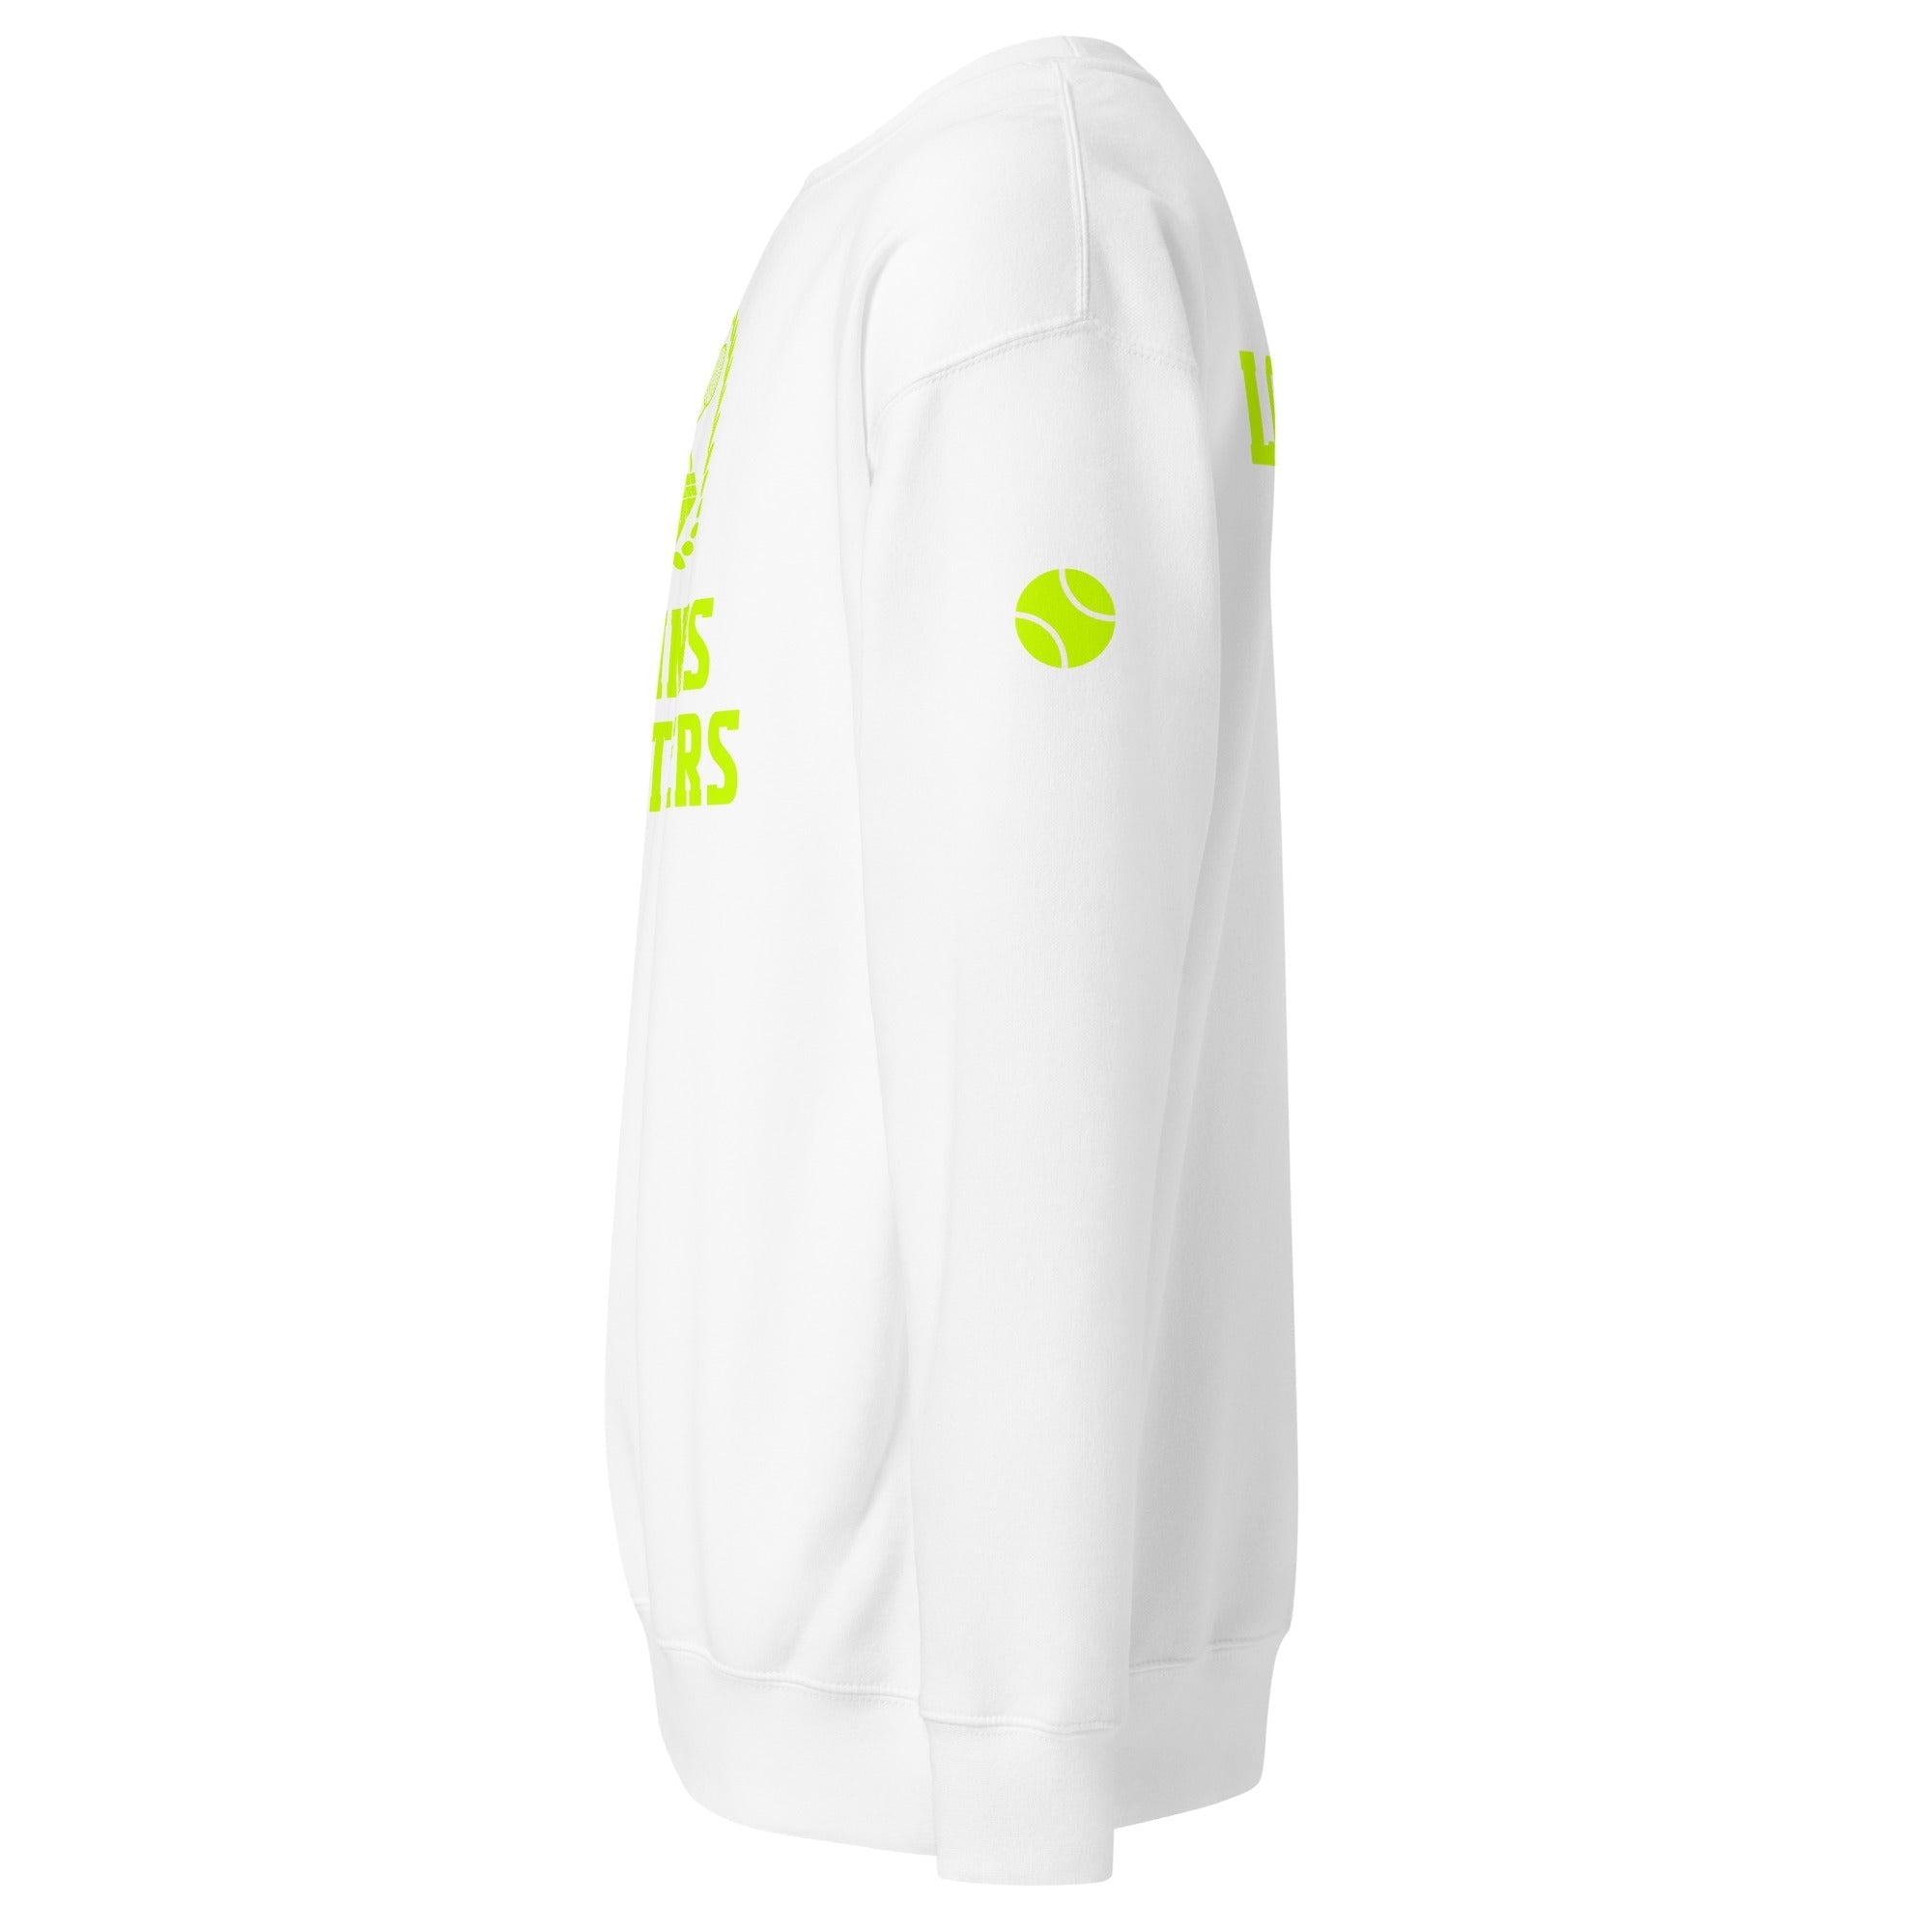 Unisex Premium Sweatshirt - Tennis Masters London - GRAPHIC T-SHIRTS